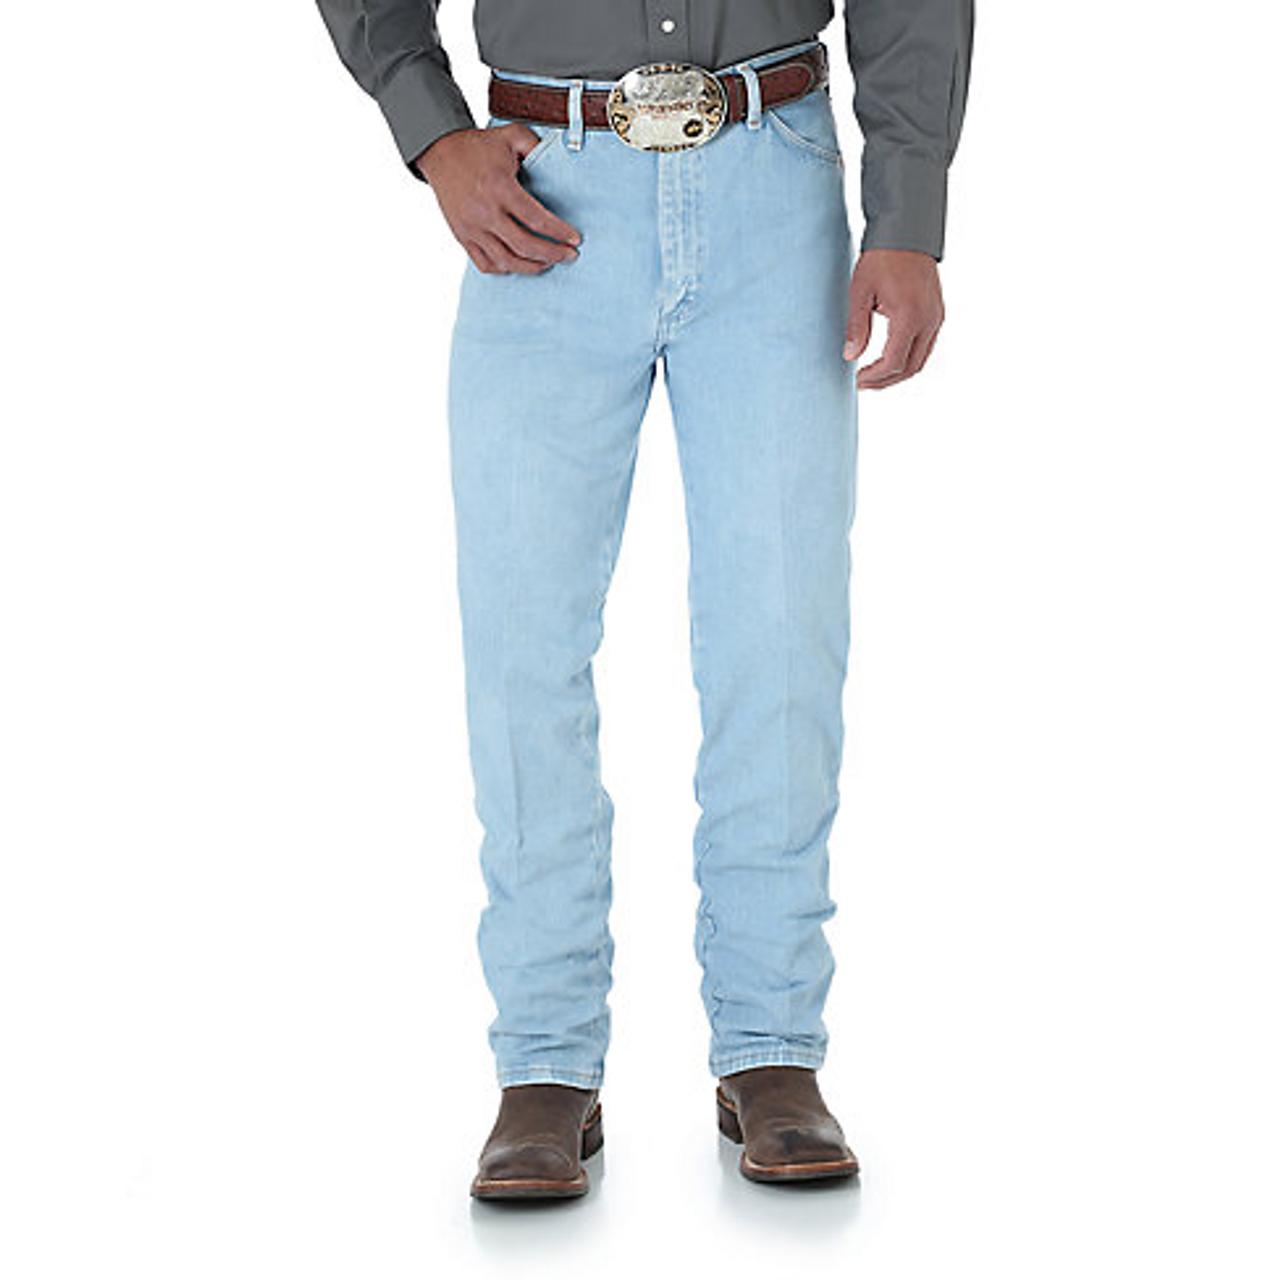 jeans wrangler cowboy cut